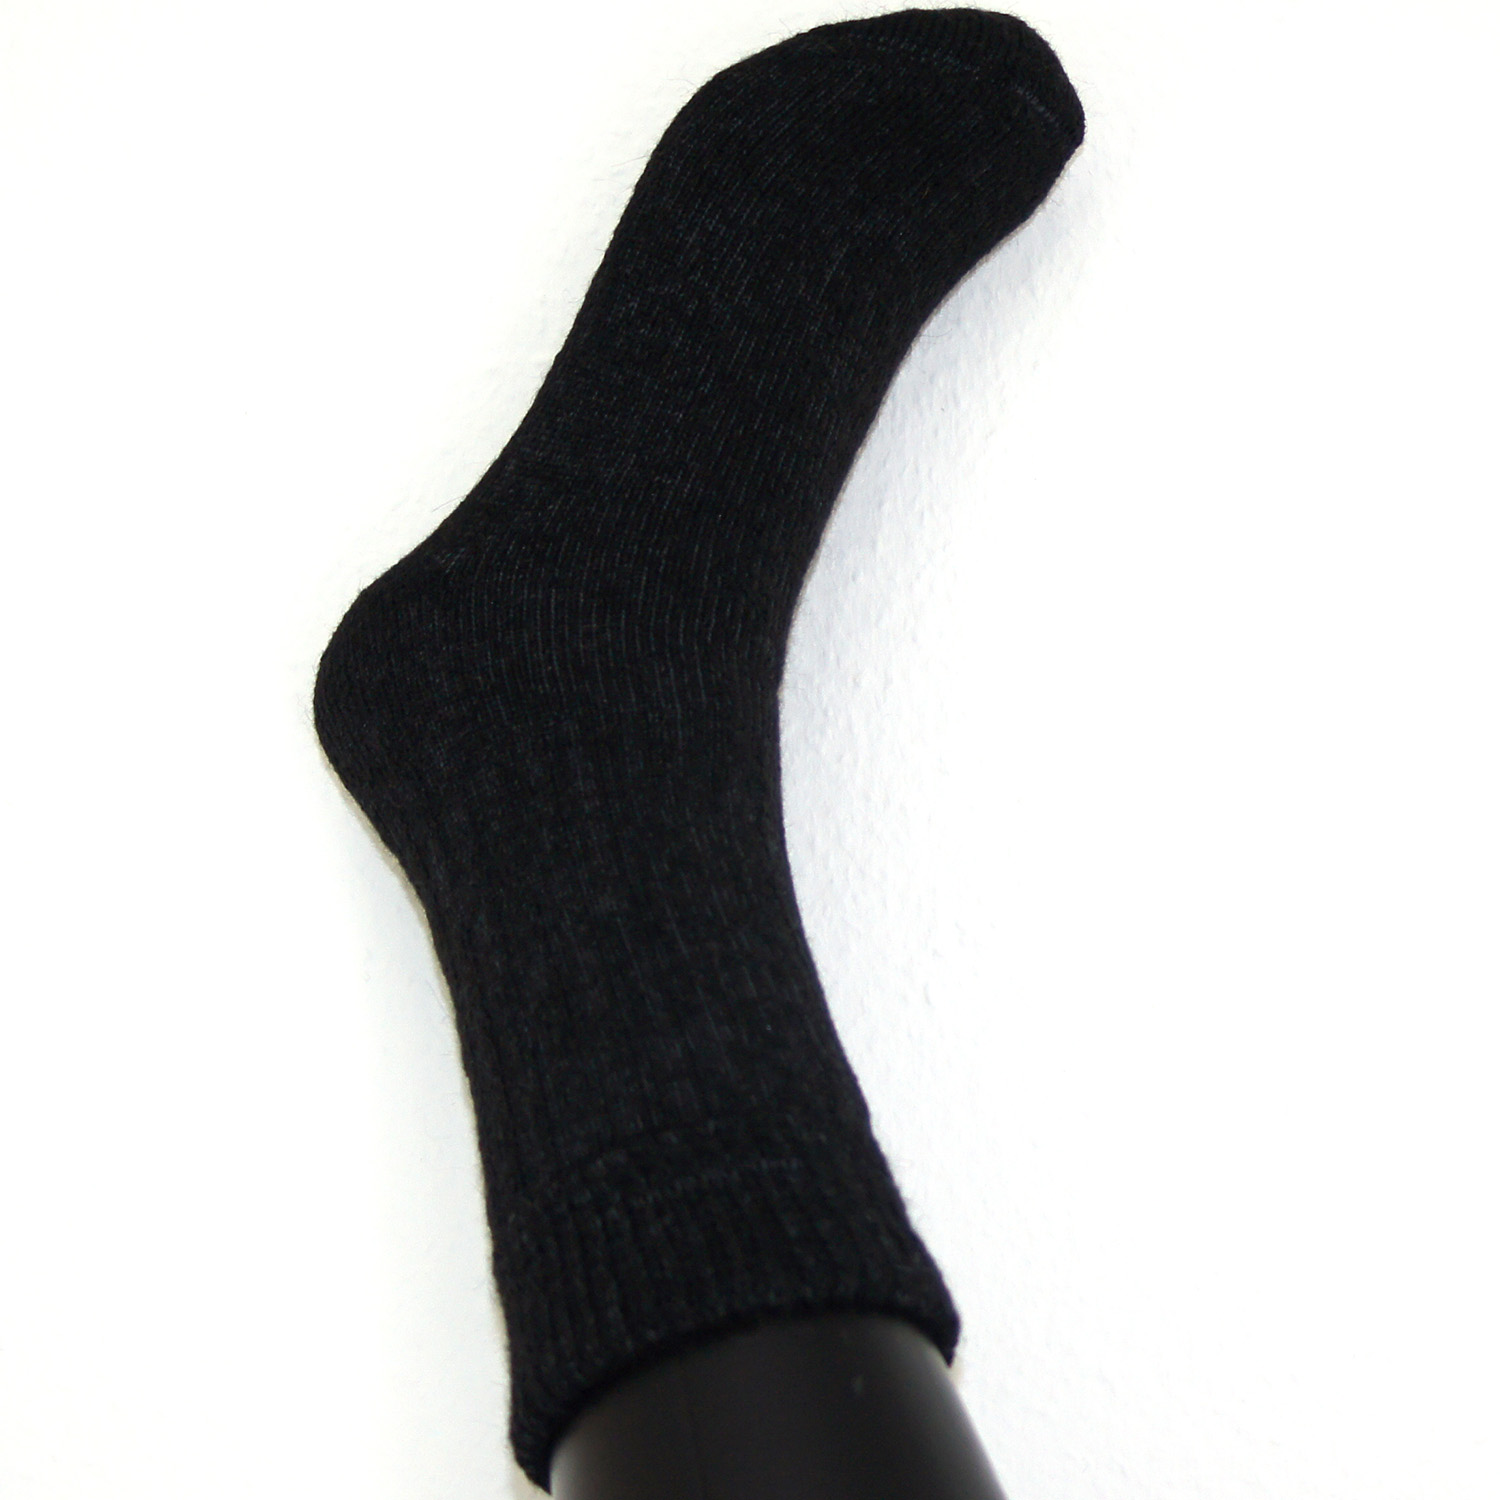 Socken/socks EXTRA, Farbe/colour: schwarz/black, Größe/size: XL